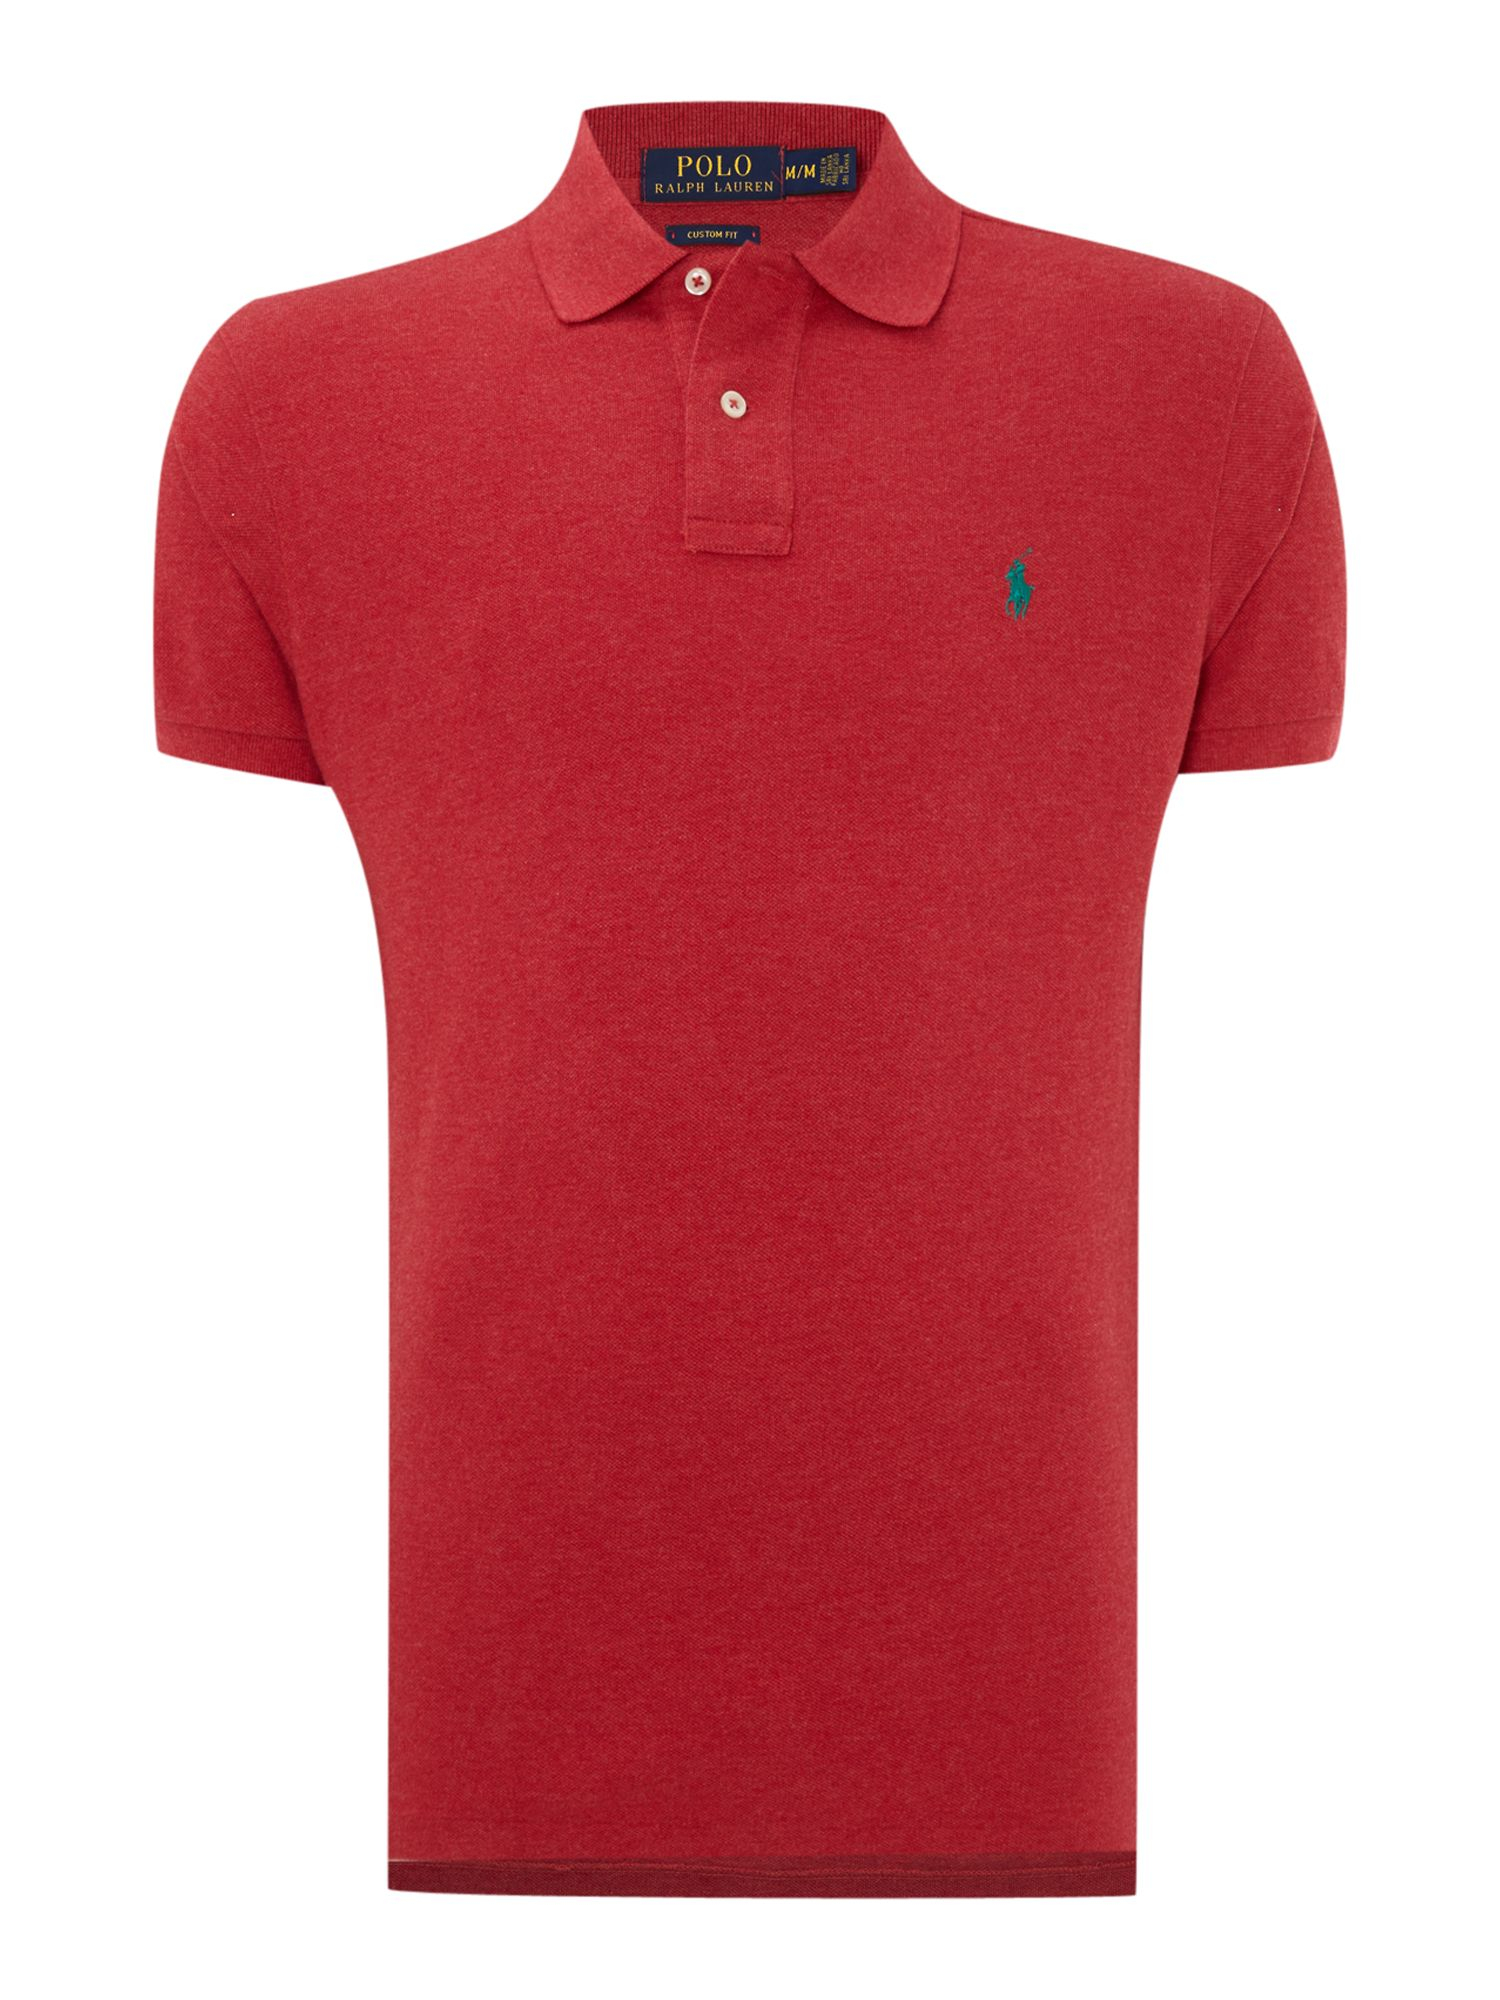 Polo ralph lauren Custom Fit Short Sleeve Mesh Polo Shirt in Red for ...